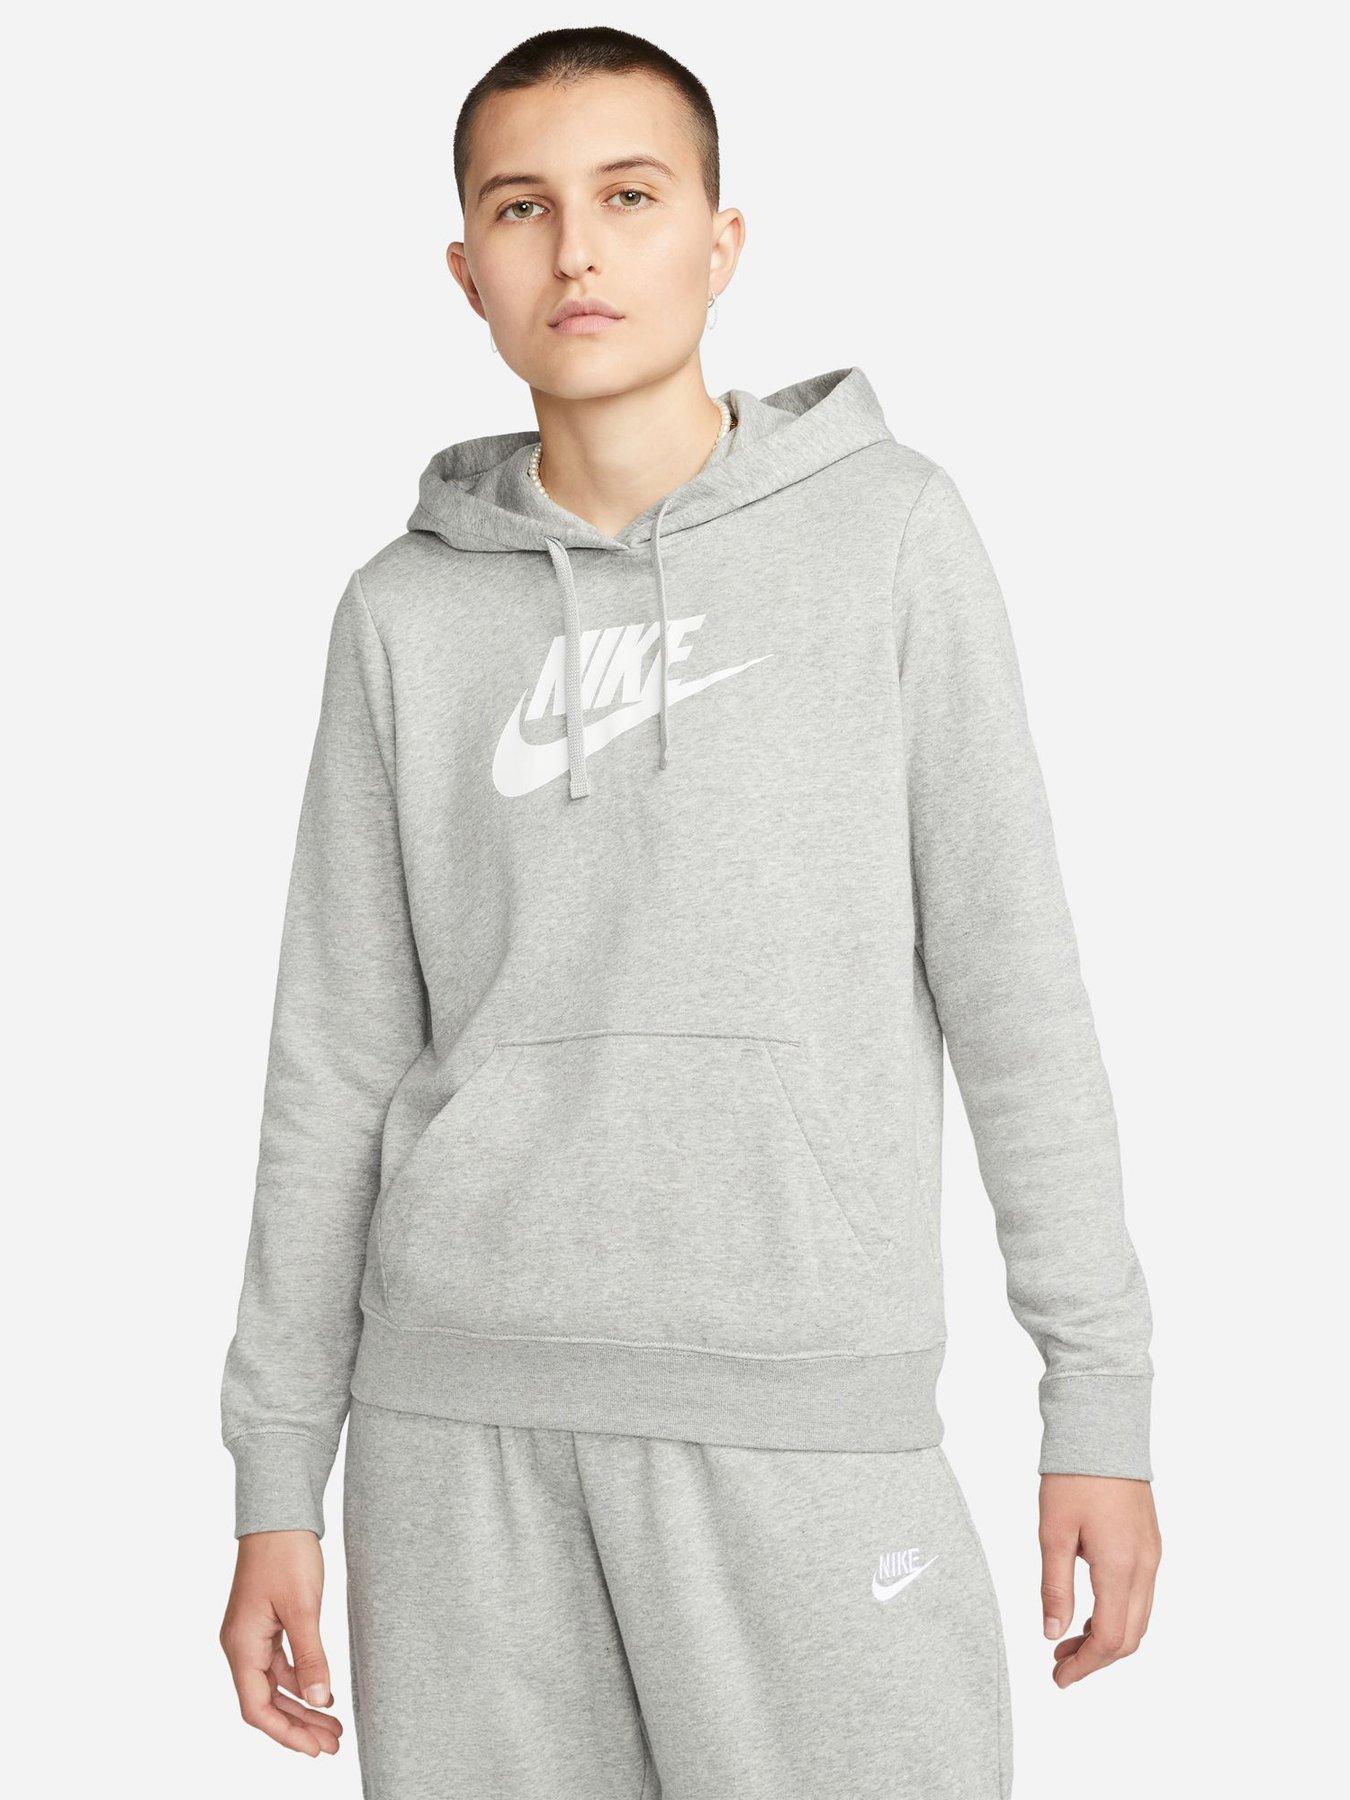 L, Nike, Hoodies & sweatshirts, Women